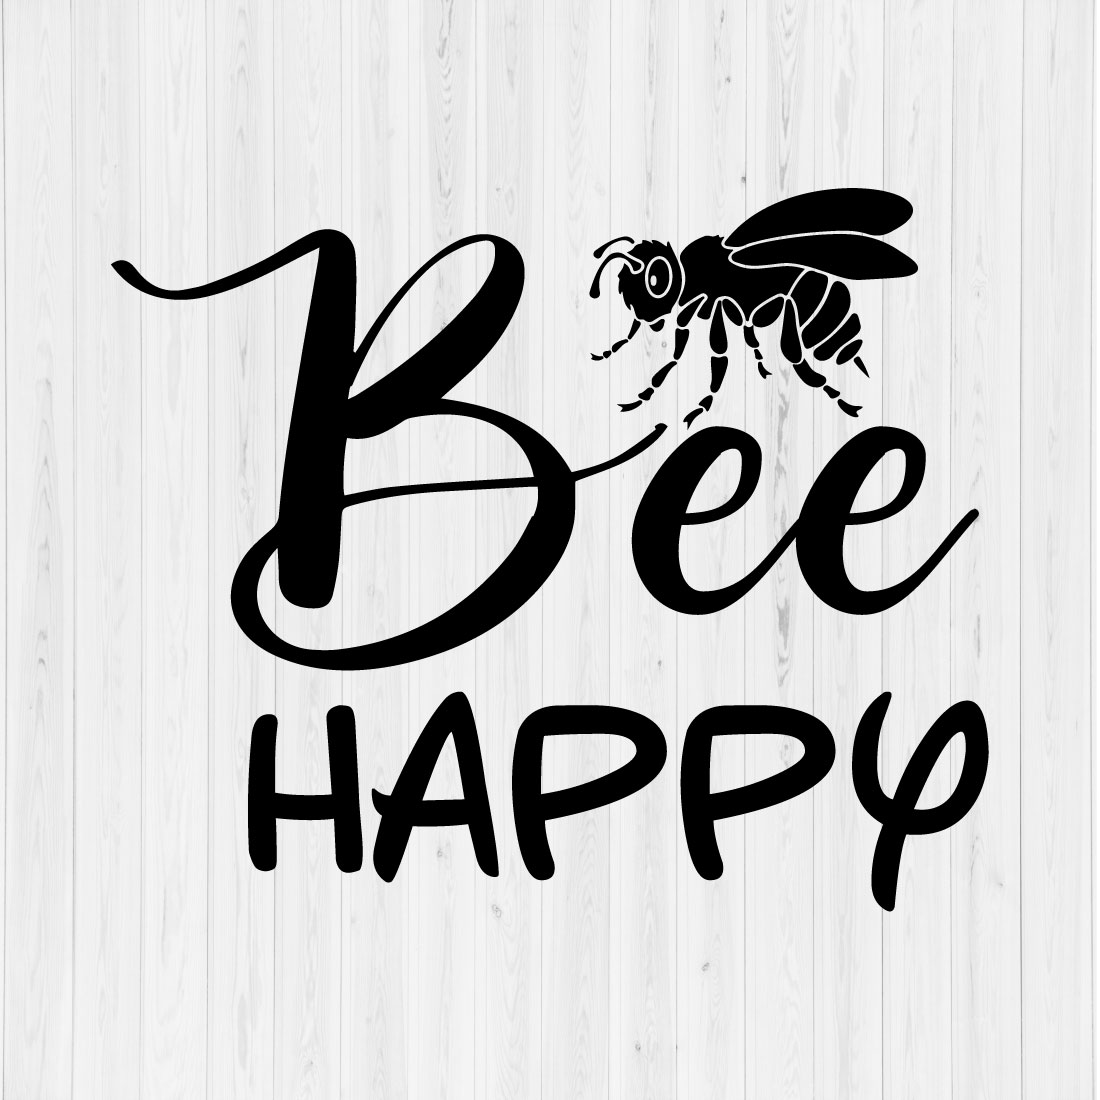 Bee Happy cover image.